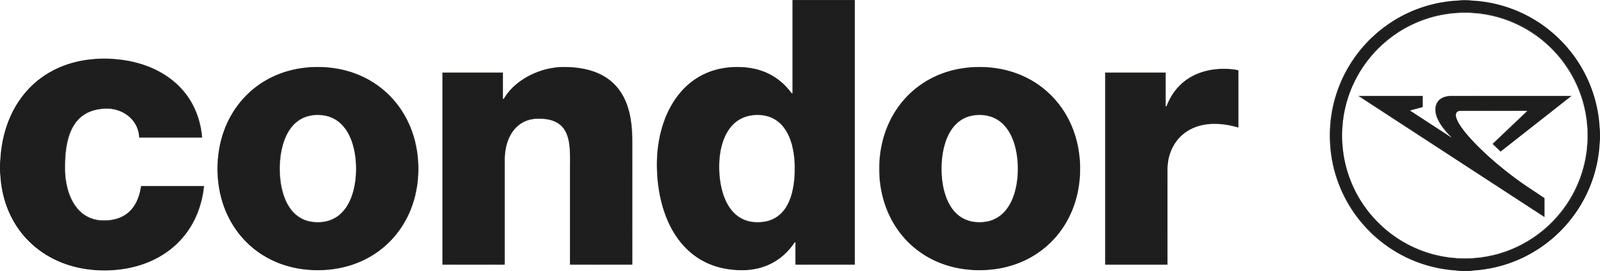 Condor_Logo - bearbeitet